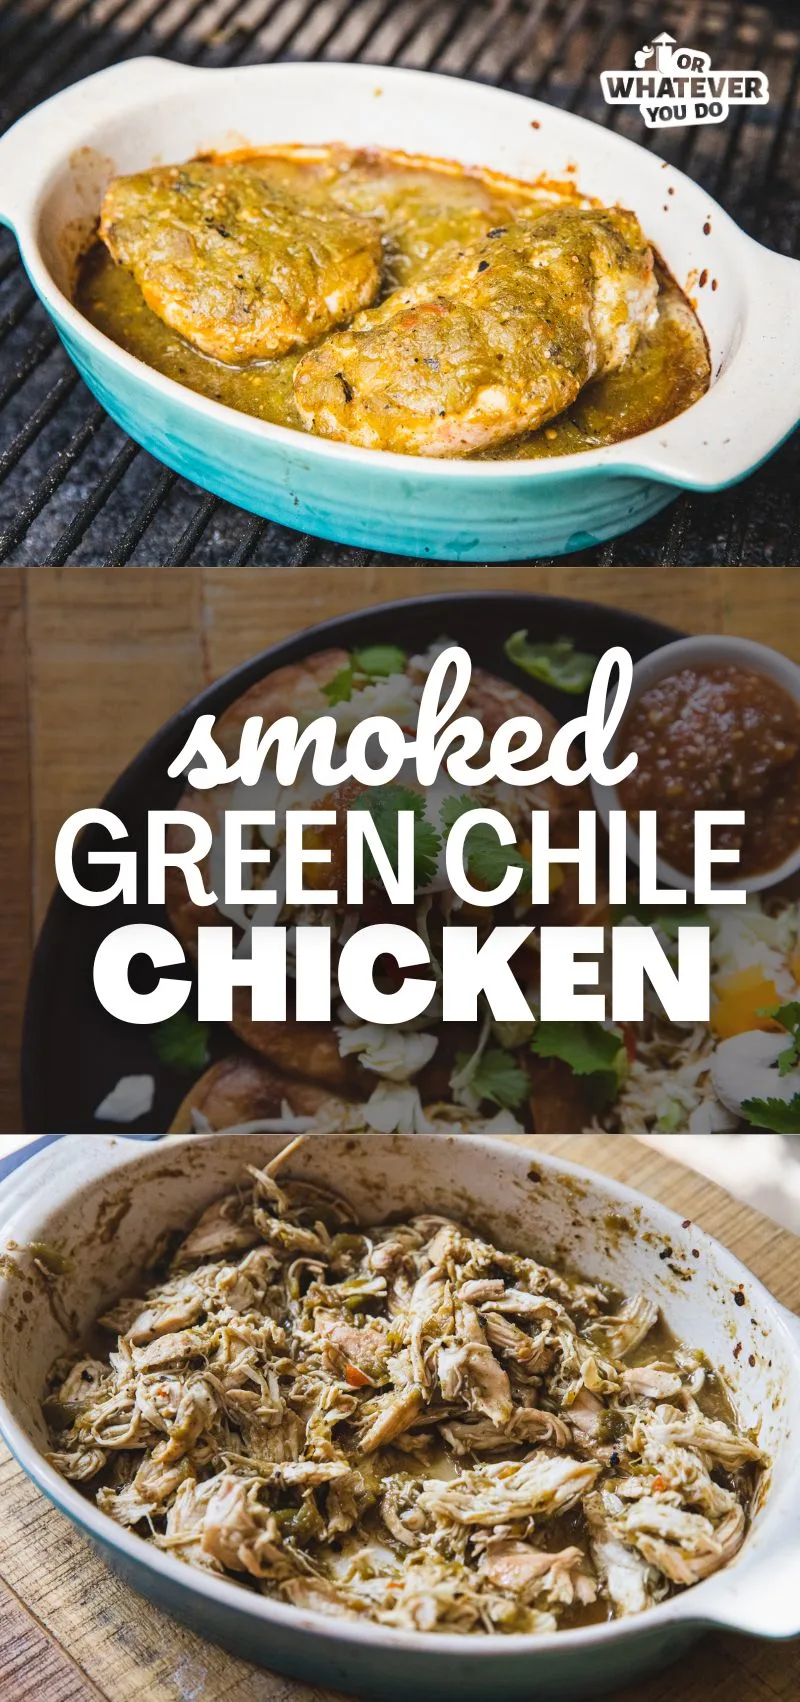 Smoked Green Chile Chicken